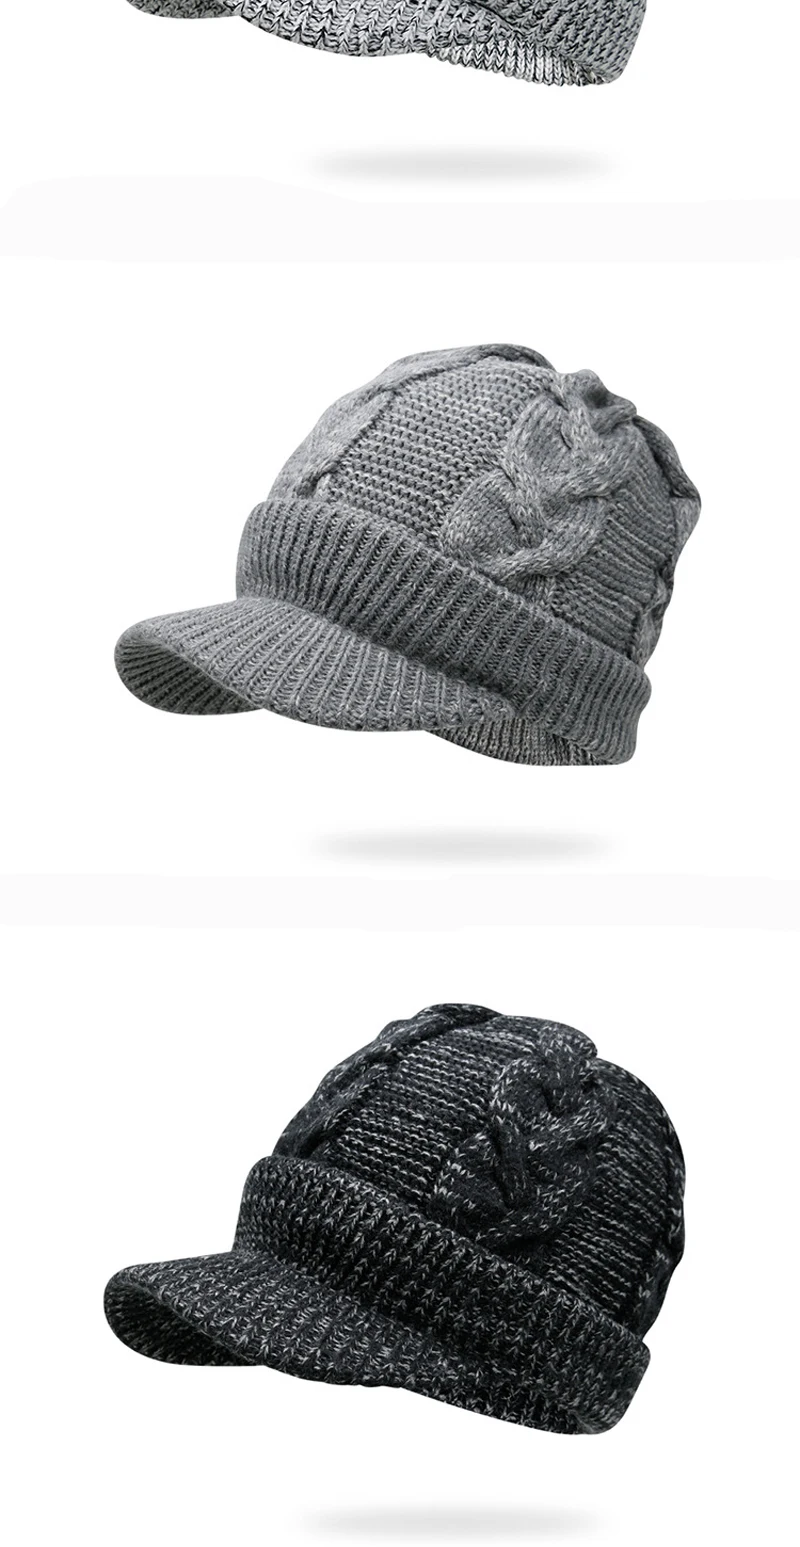 Lanmaocat Knitting Hat Men Women Winter Knitting Hats Warm Cap with Visor Wool Winter Knitting Hats Free Shipping